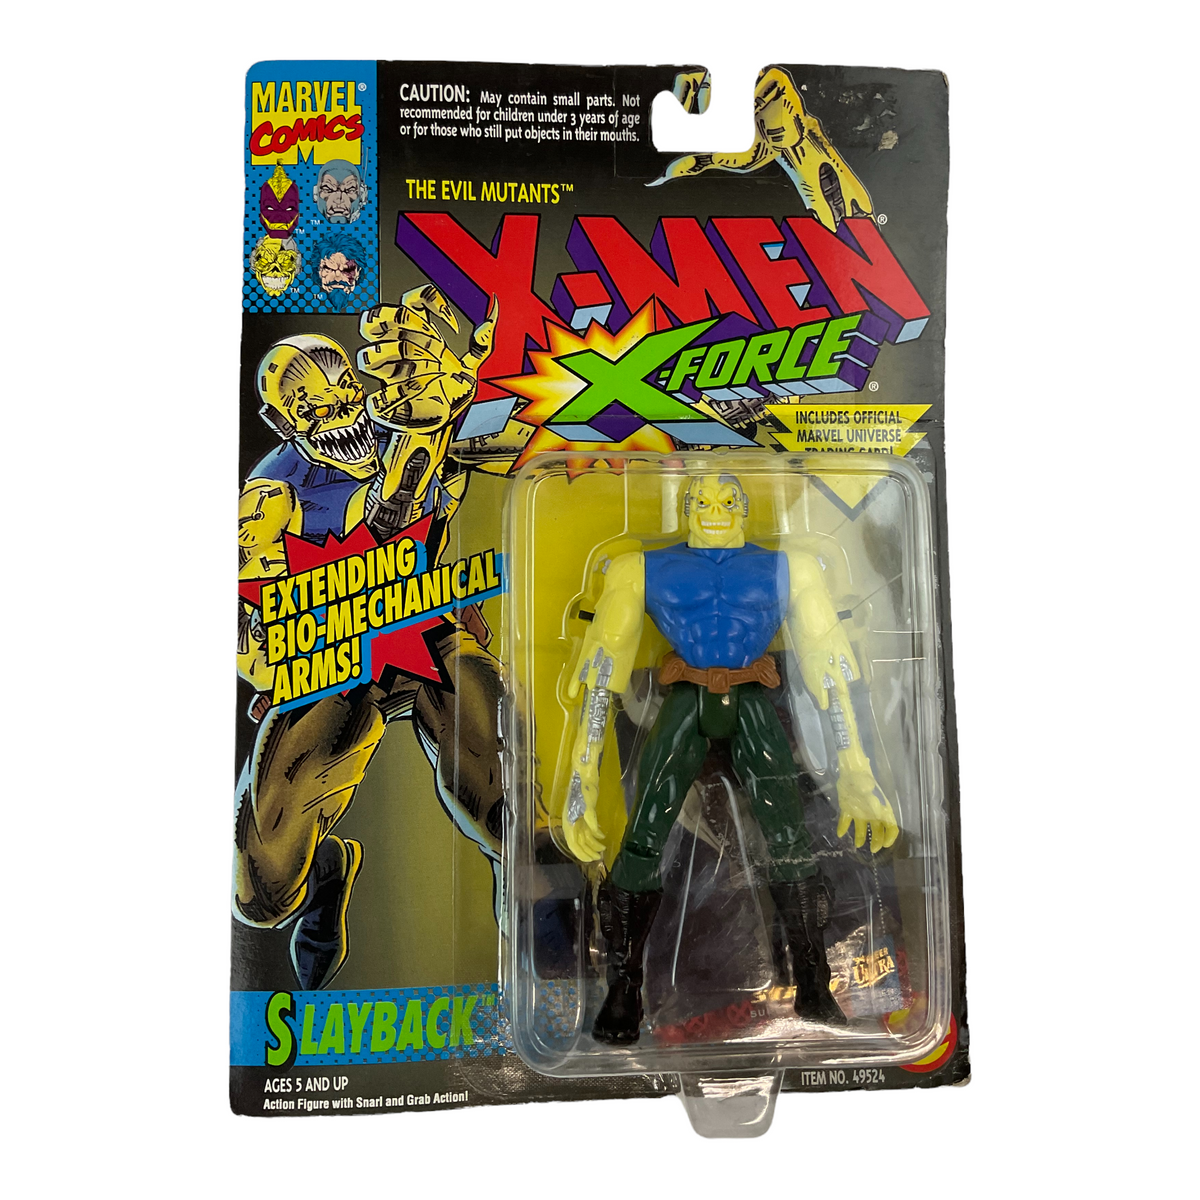 Slayback Action Figure 1994 X-Men X-Force - Evil Mutants w/ Snarl &amp; Grab Action Toy